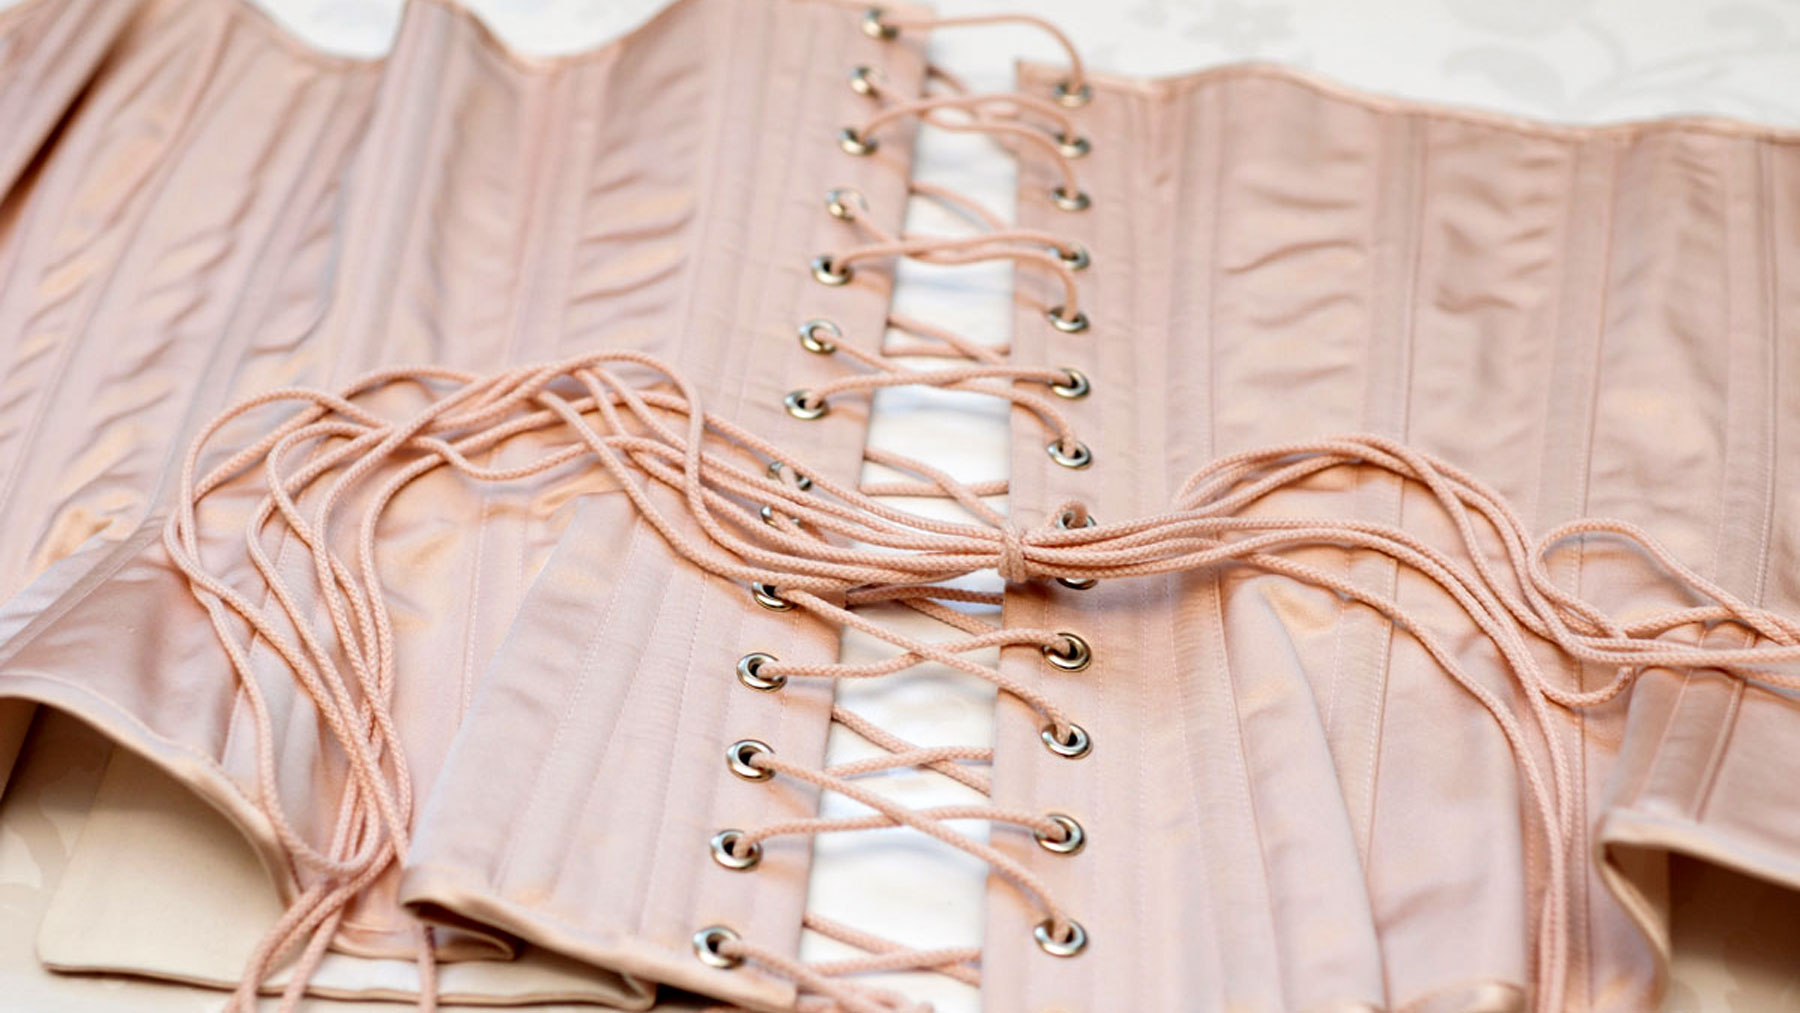 Real steel-boned corset in pink silk satin